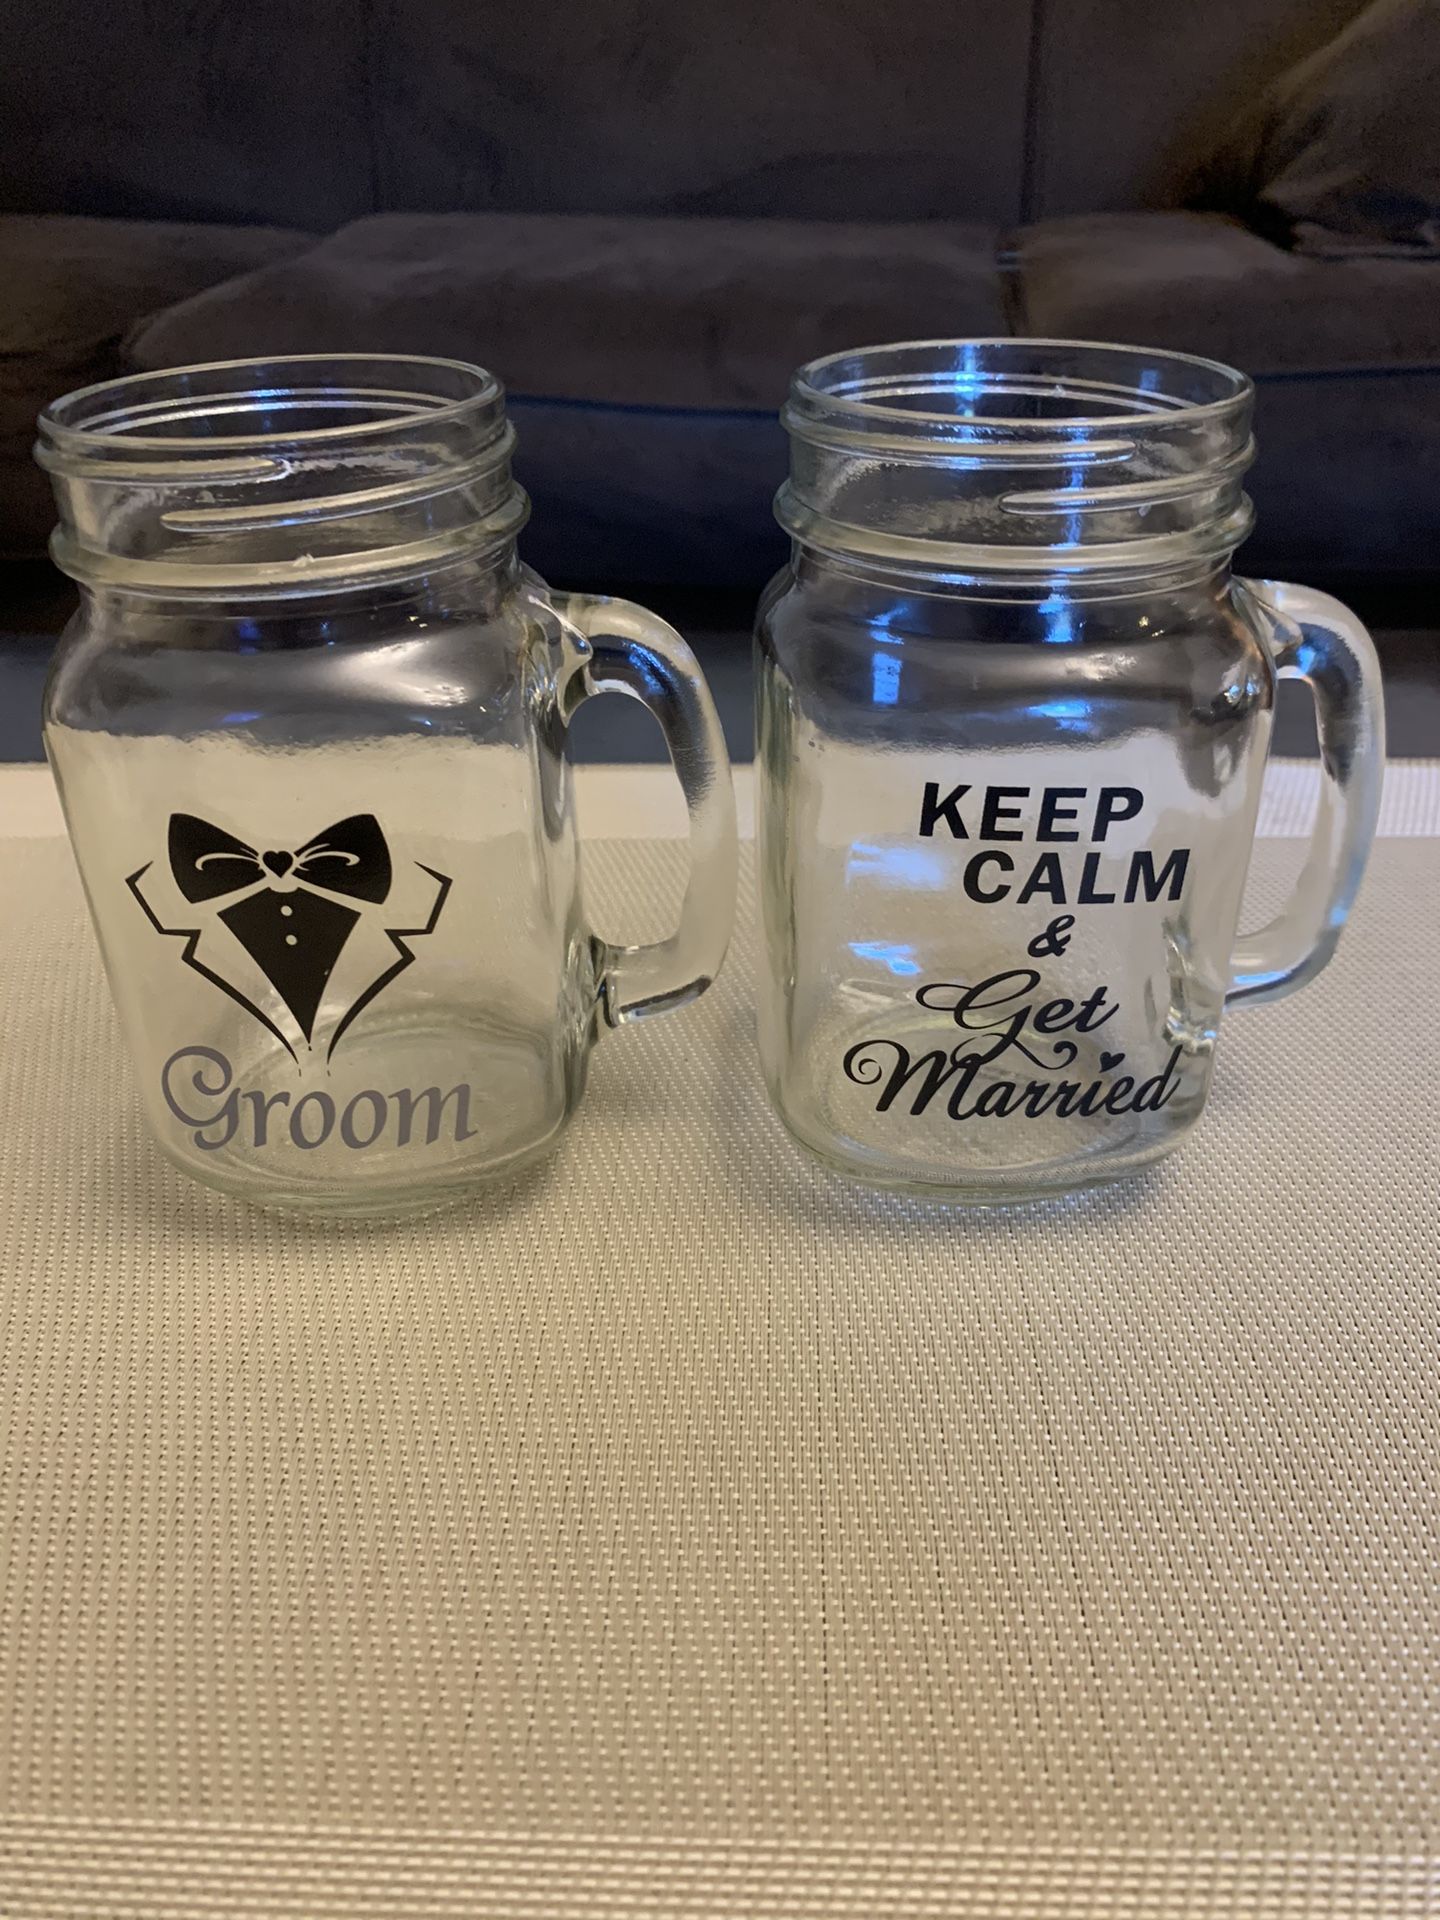 Groom and Keep Calm & Get Married MasonJar-Handles